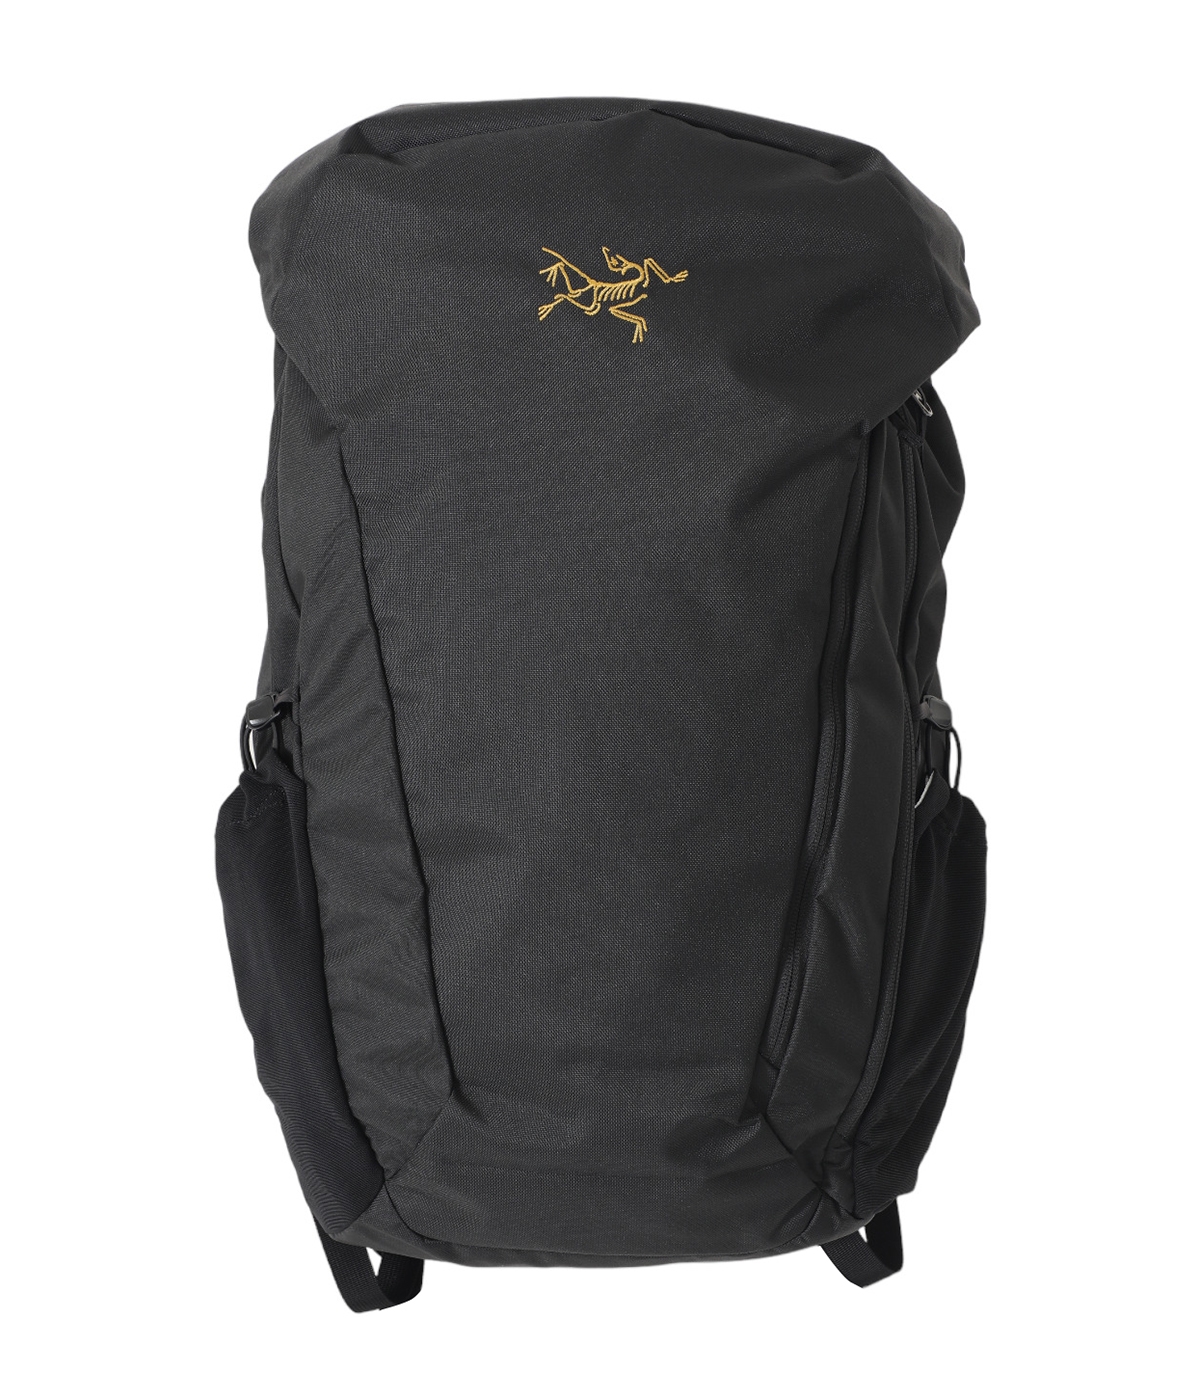 ARC’TERYX   アークテリクス Mantis 30 Backpack 鞄 バックパック リュック メンズ レディース ユニセックス ブラック ロゴ デイパック ポリエステル 軽量 アウトドア アクティビティ デイリーユース 旅行 キャンプ オールシーズン L08001800